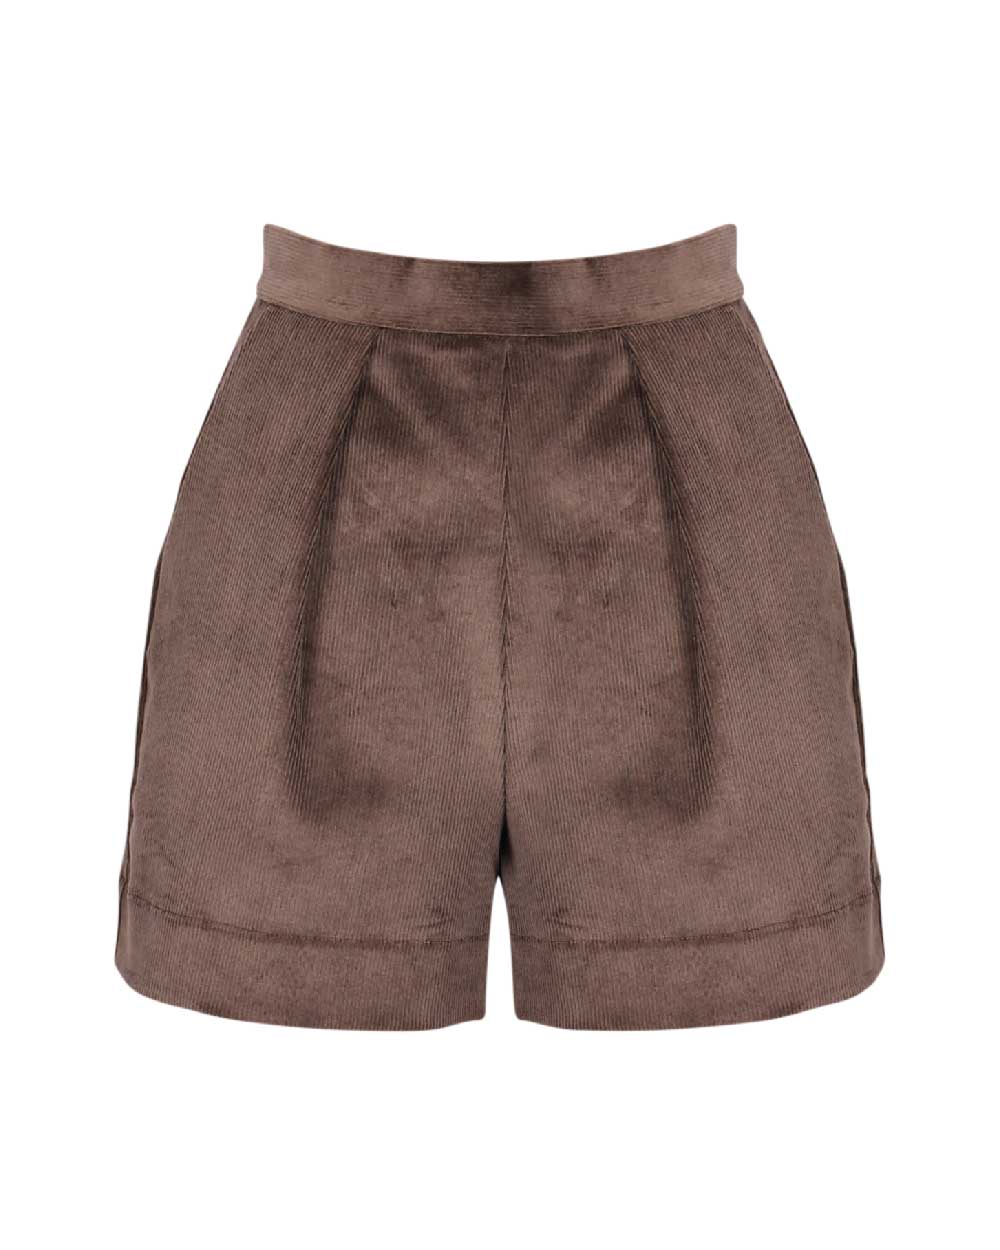 Liam shorts, $189